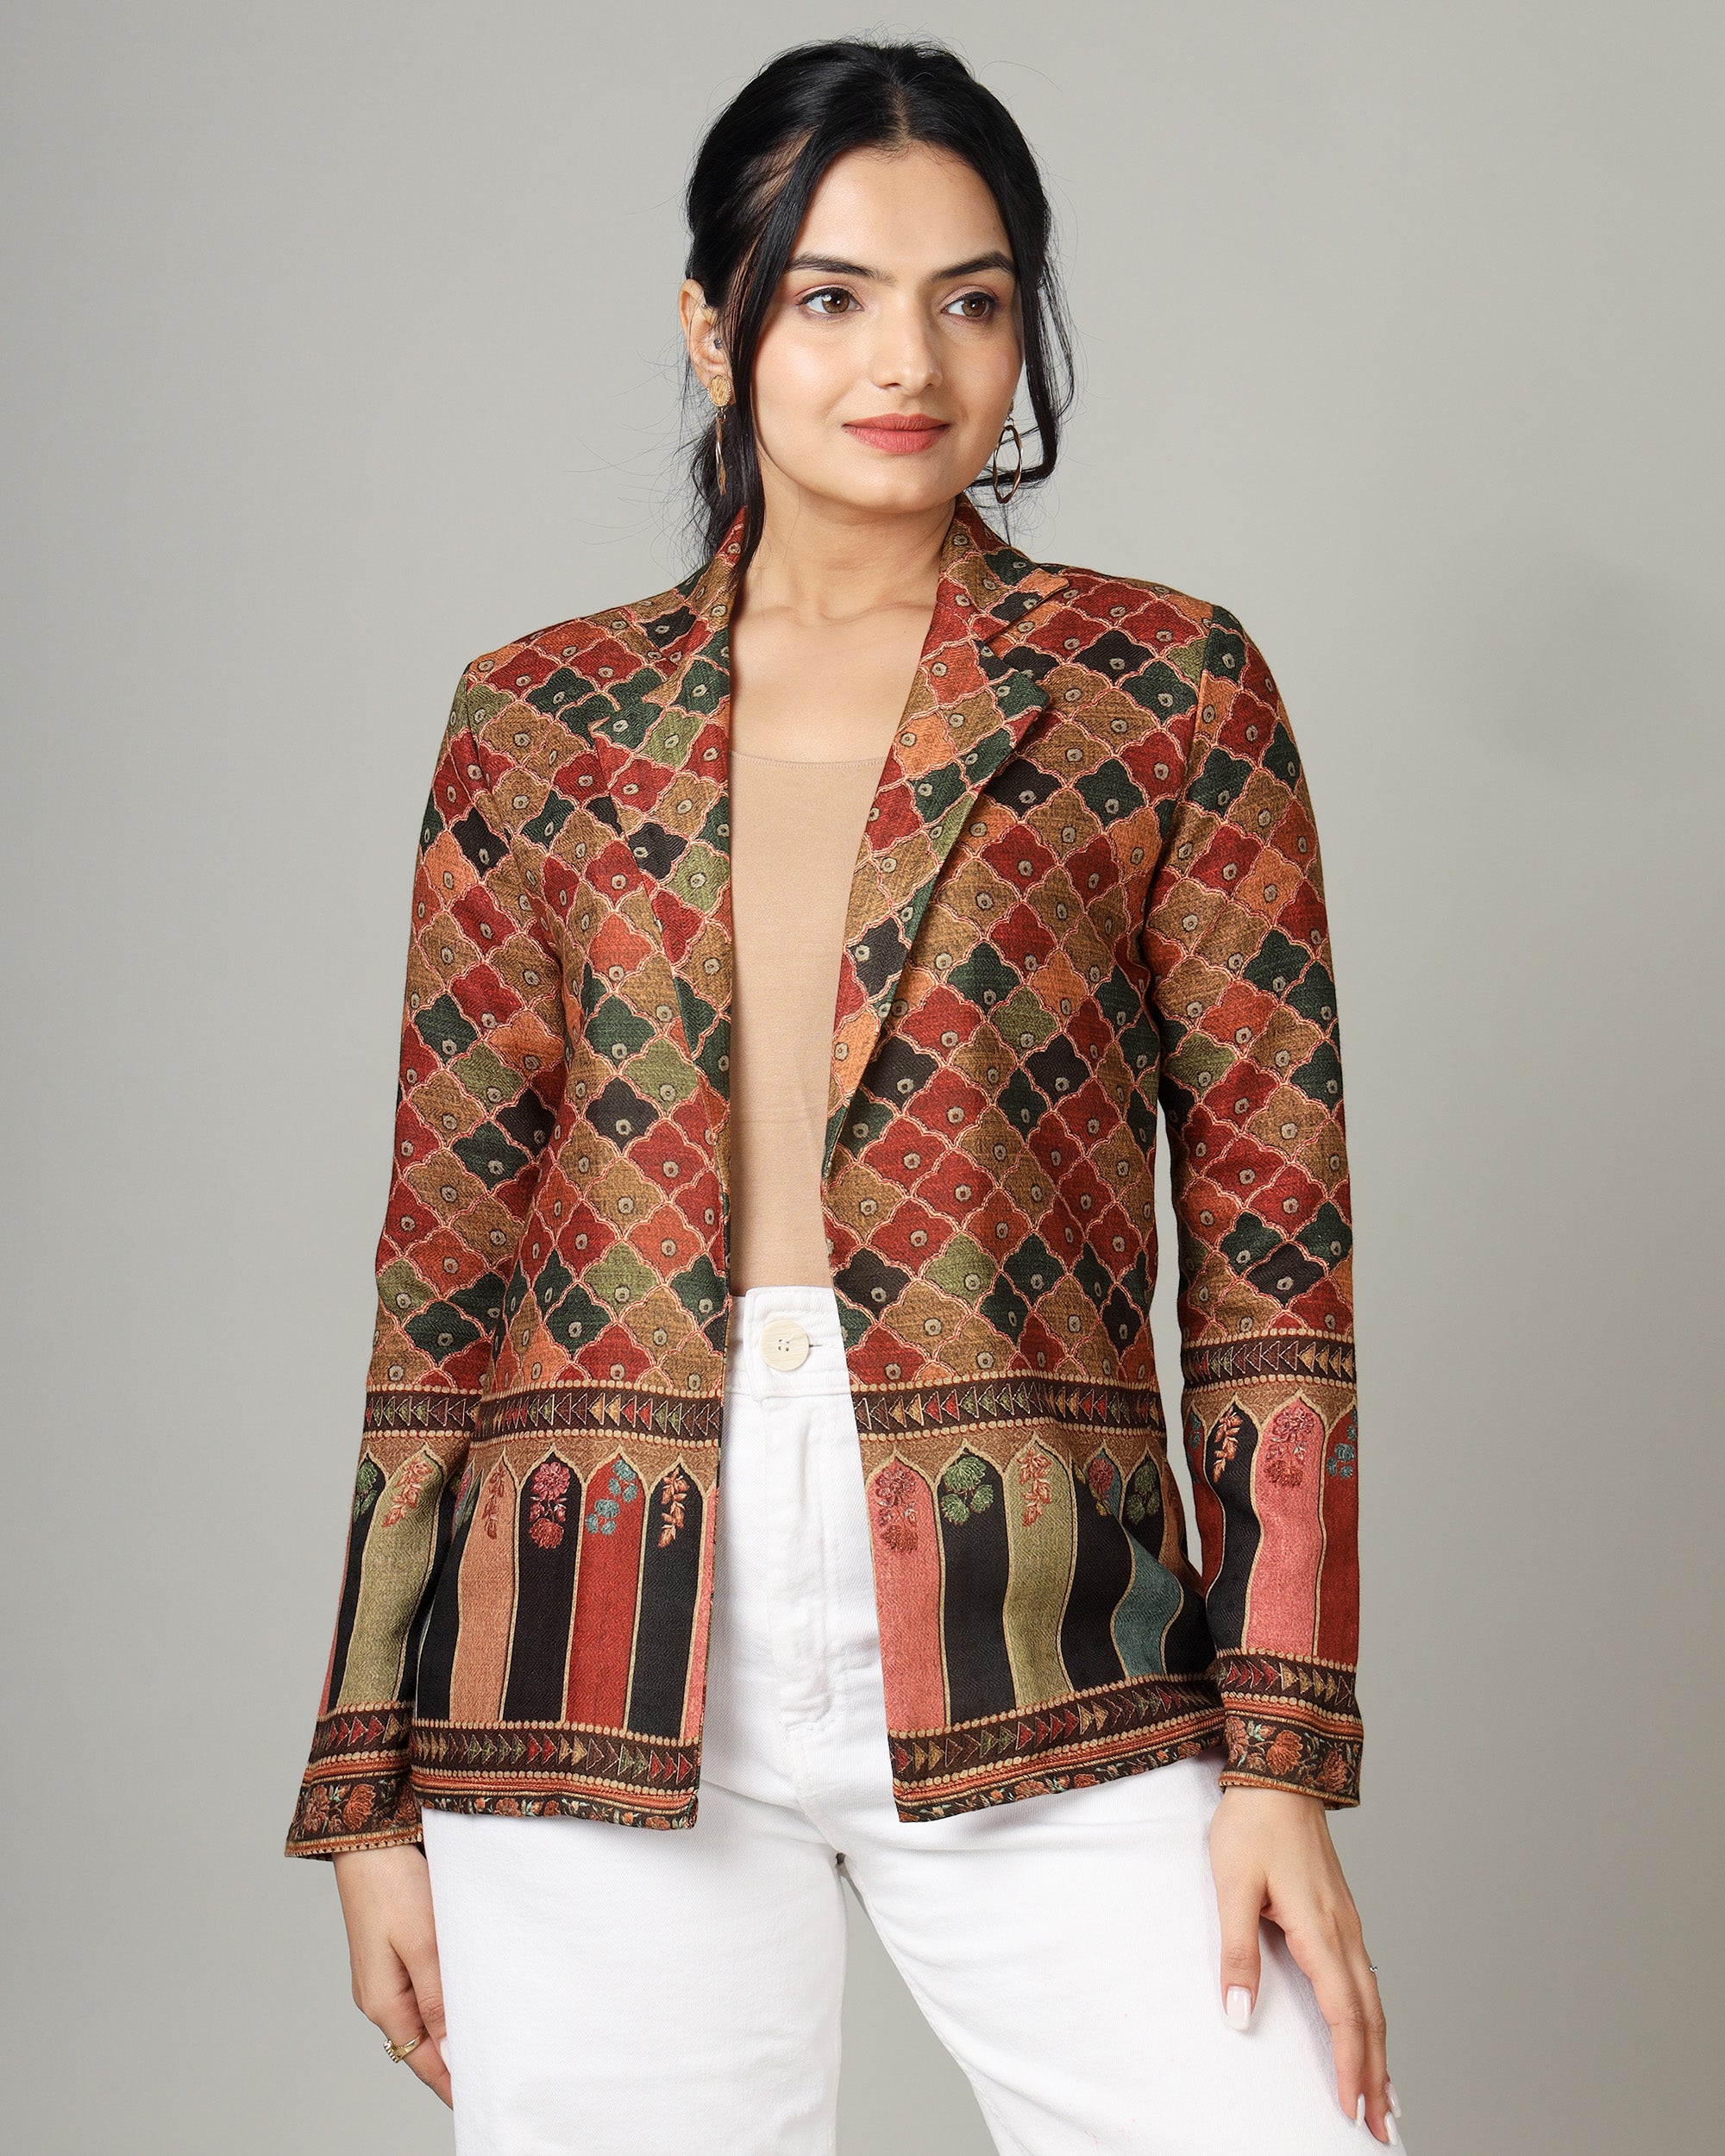 Women's cotton and viscose Jackets and Blazers | Marella